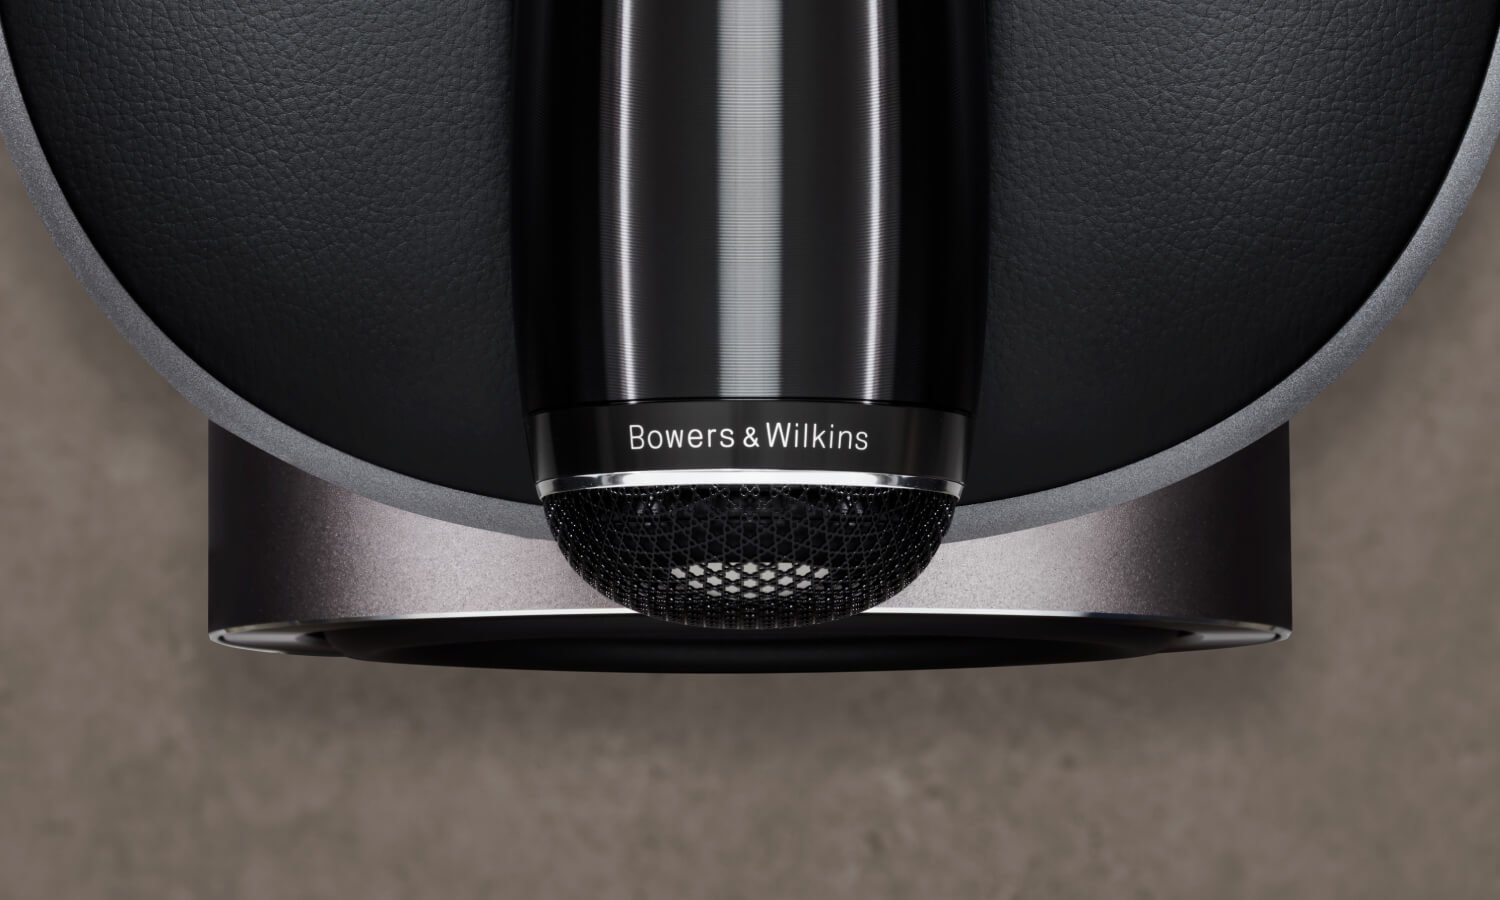 Bowers & Wilkins - Complete range available - Audio Venue